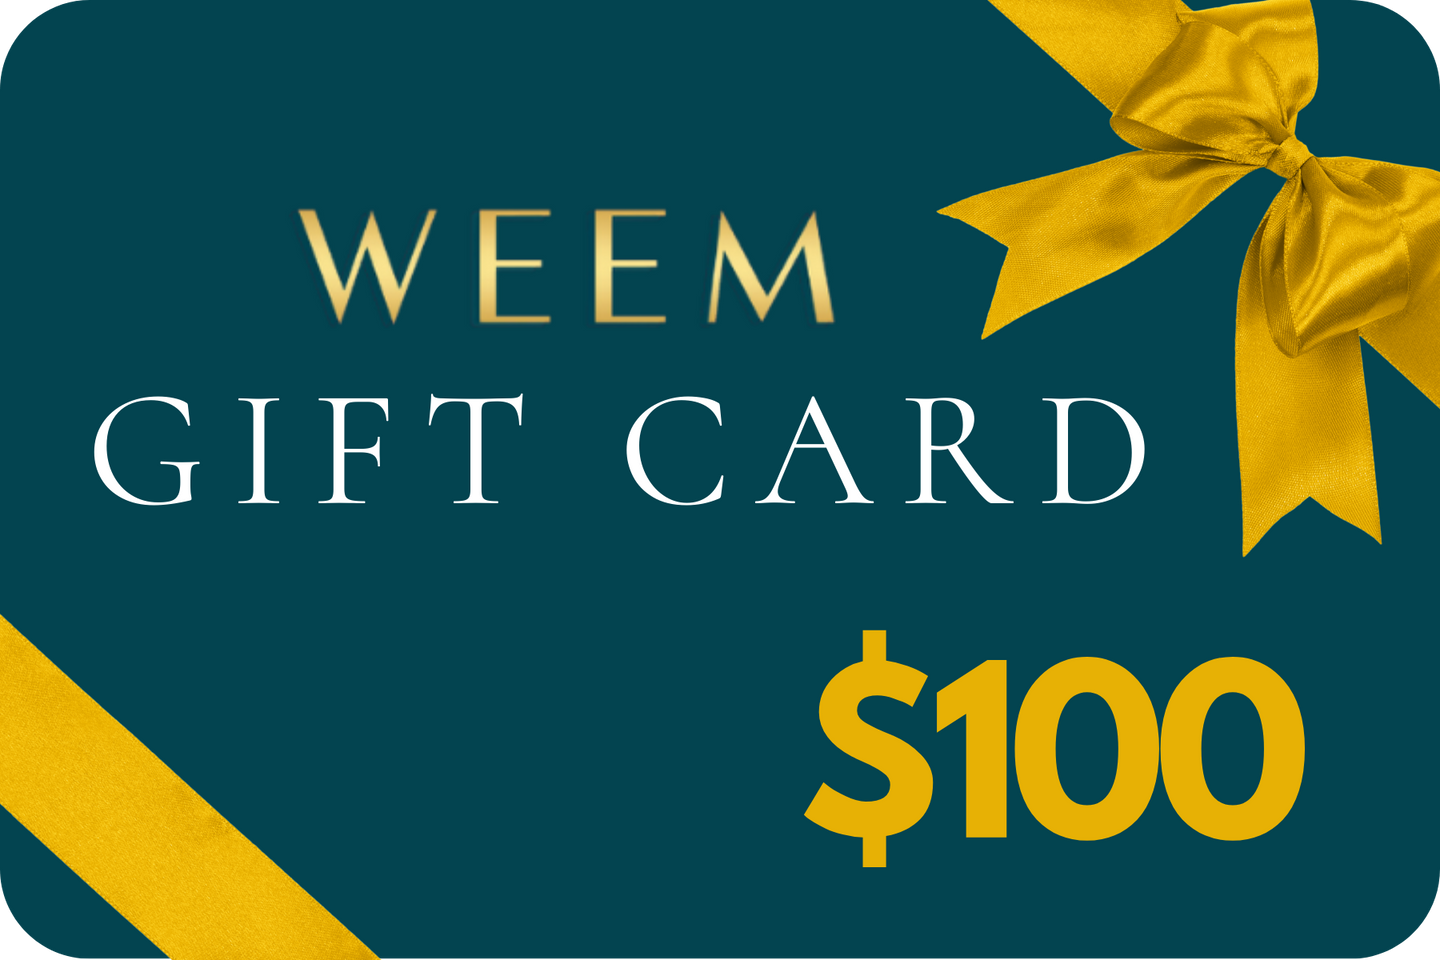 WEEM $100 Gift Card